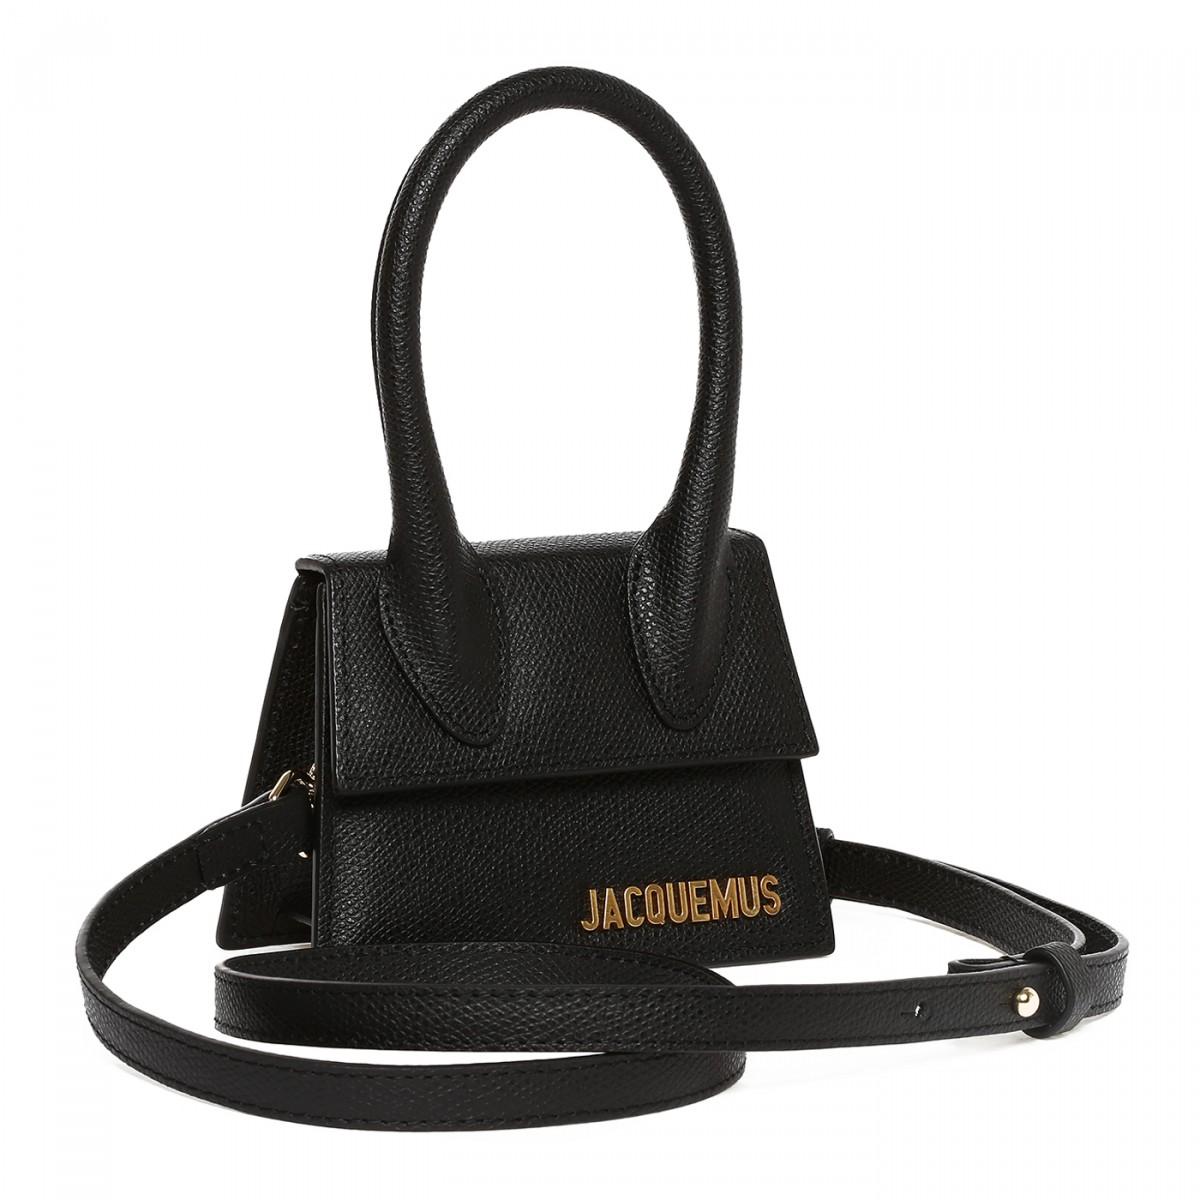 Jacquemus Leather Le Chiquito Mini Bag in Black - Lyst